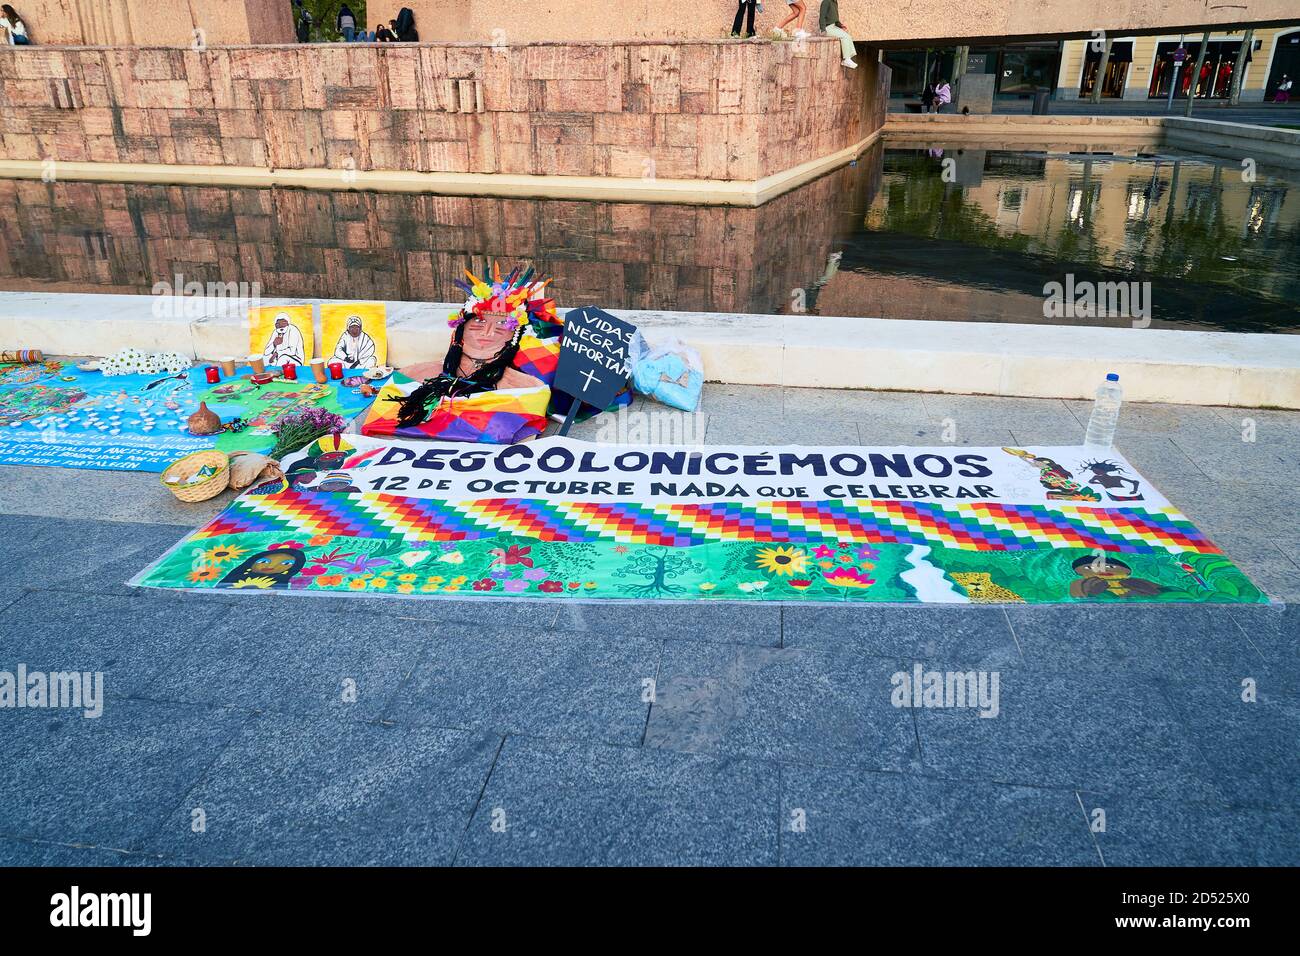 Let's decolonize legge un banner colorato, Plaza Colon, dia Nacional de España, dia de la Hispanidad, protesta, Madrid, Spagna, 12 ottobre 2020 Foto Stock